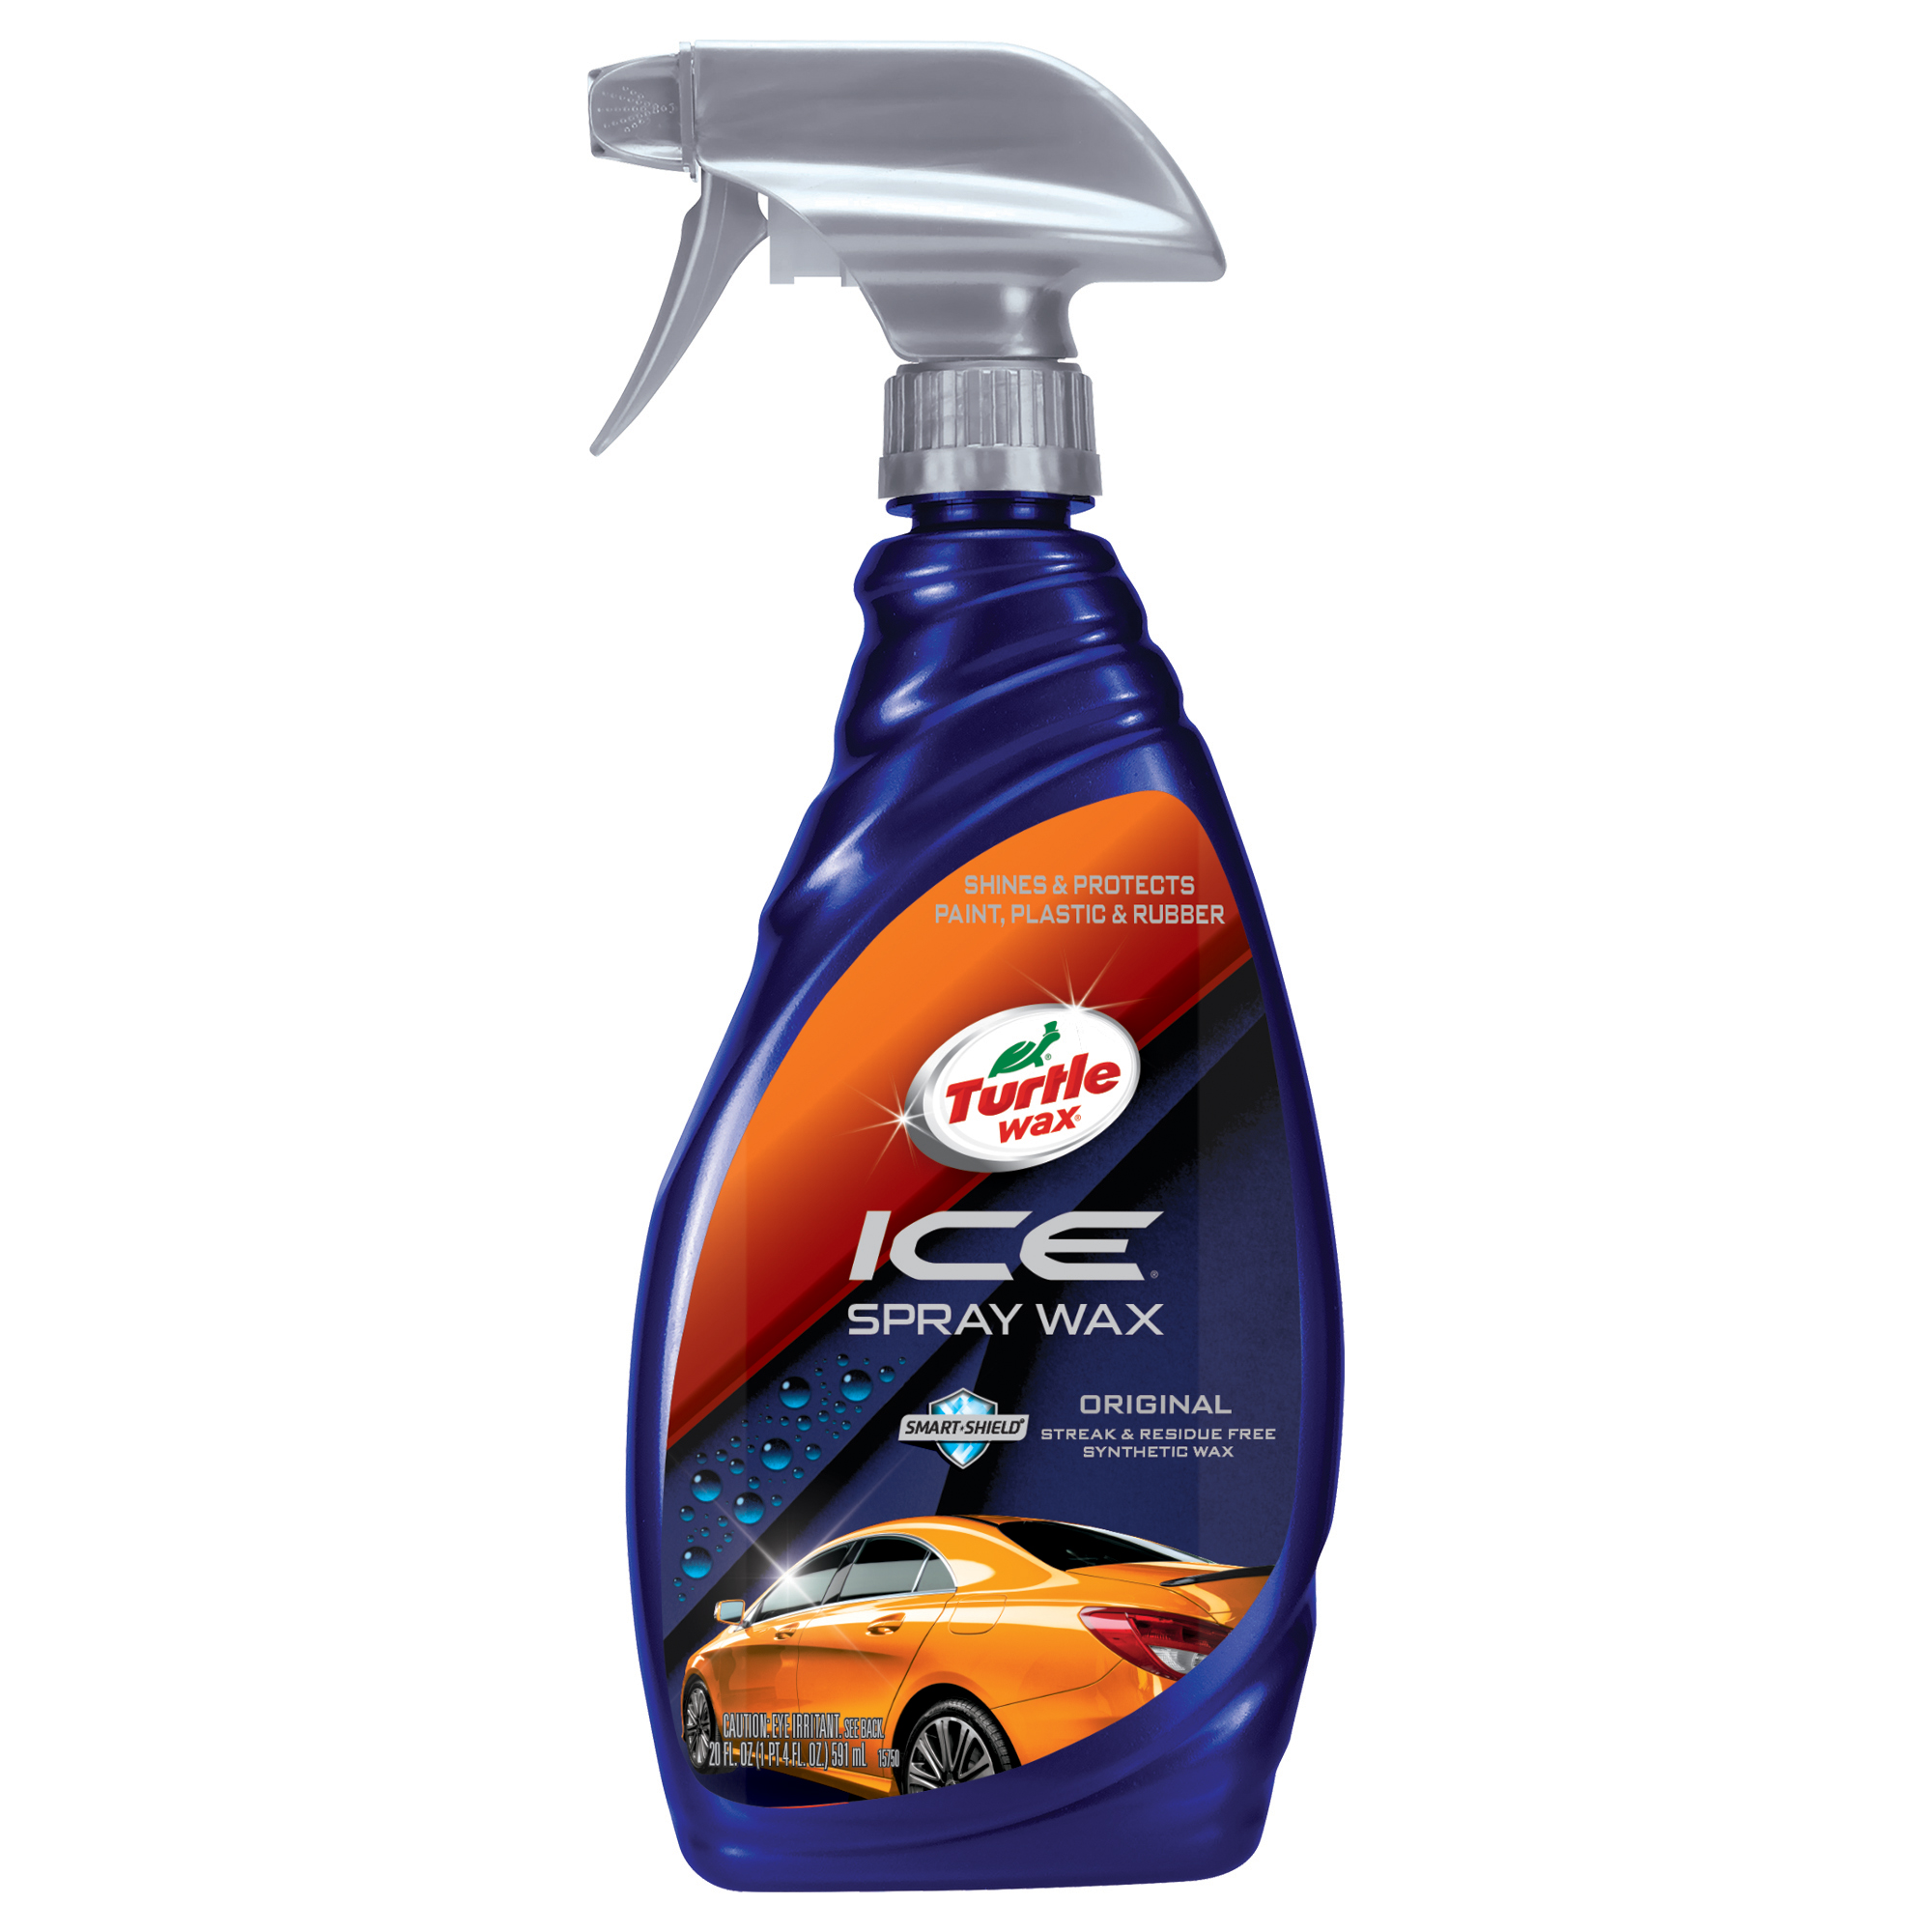 Turtle Wax Ice Premium Car Spray Wax Trigger, 20 oz - image 1 of 9